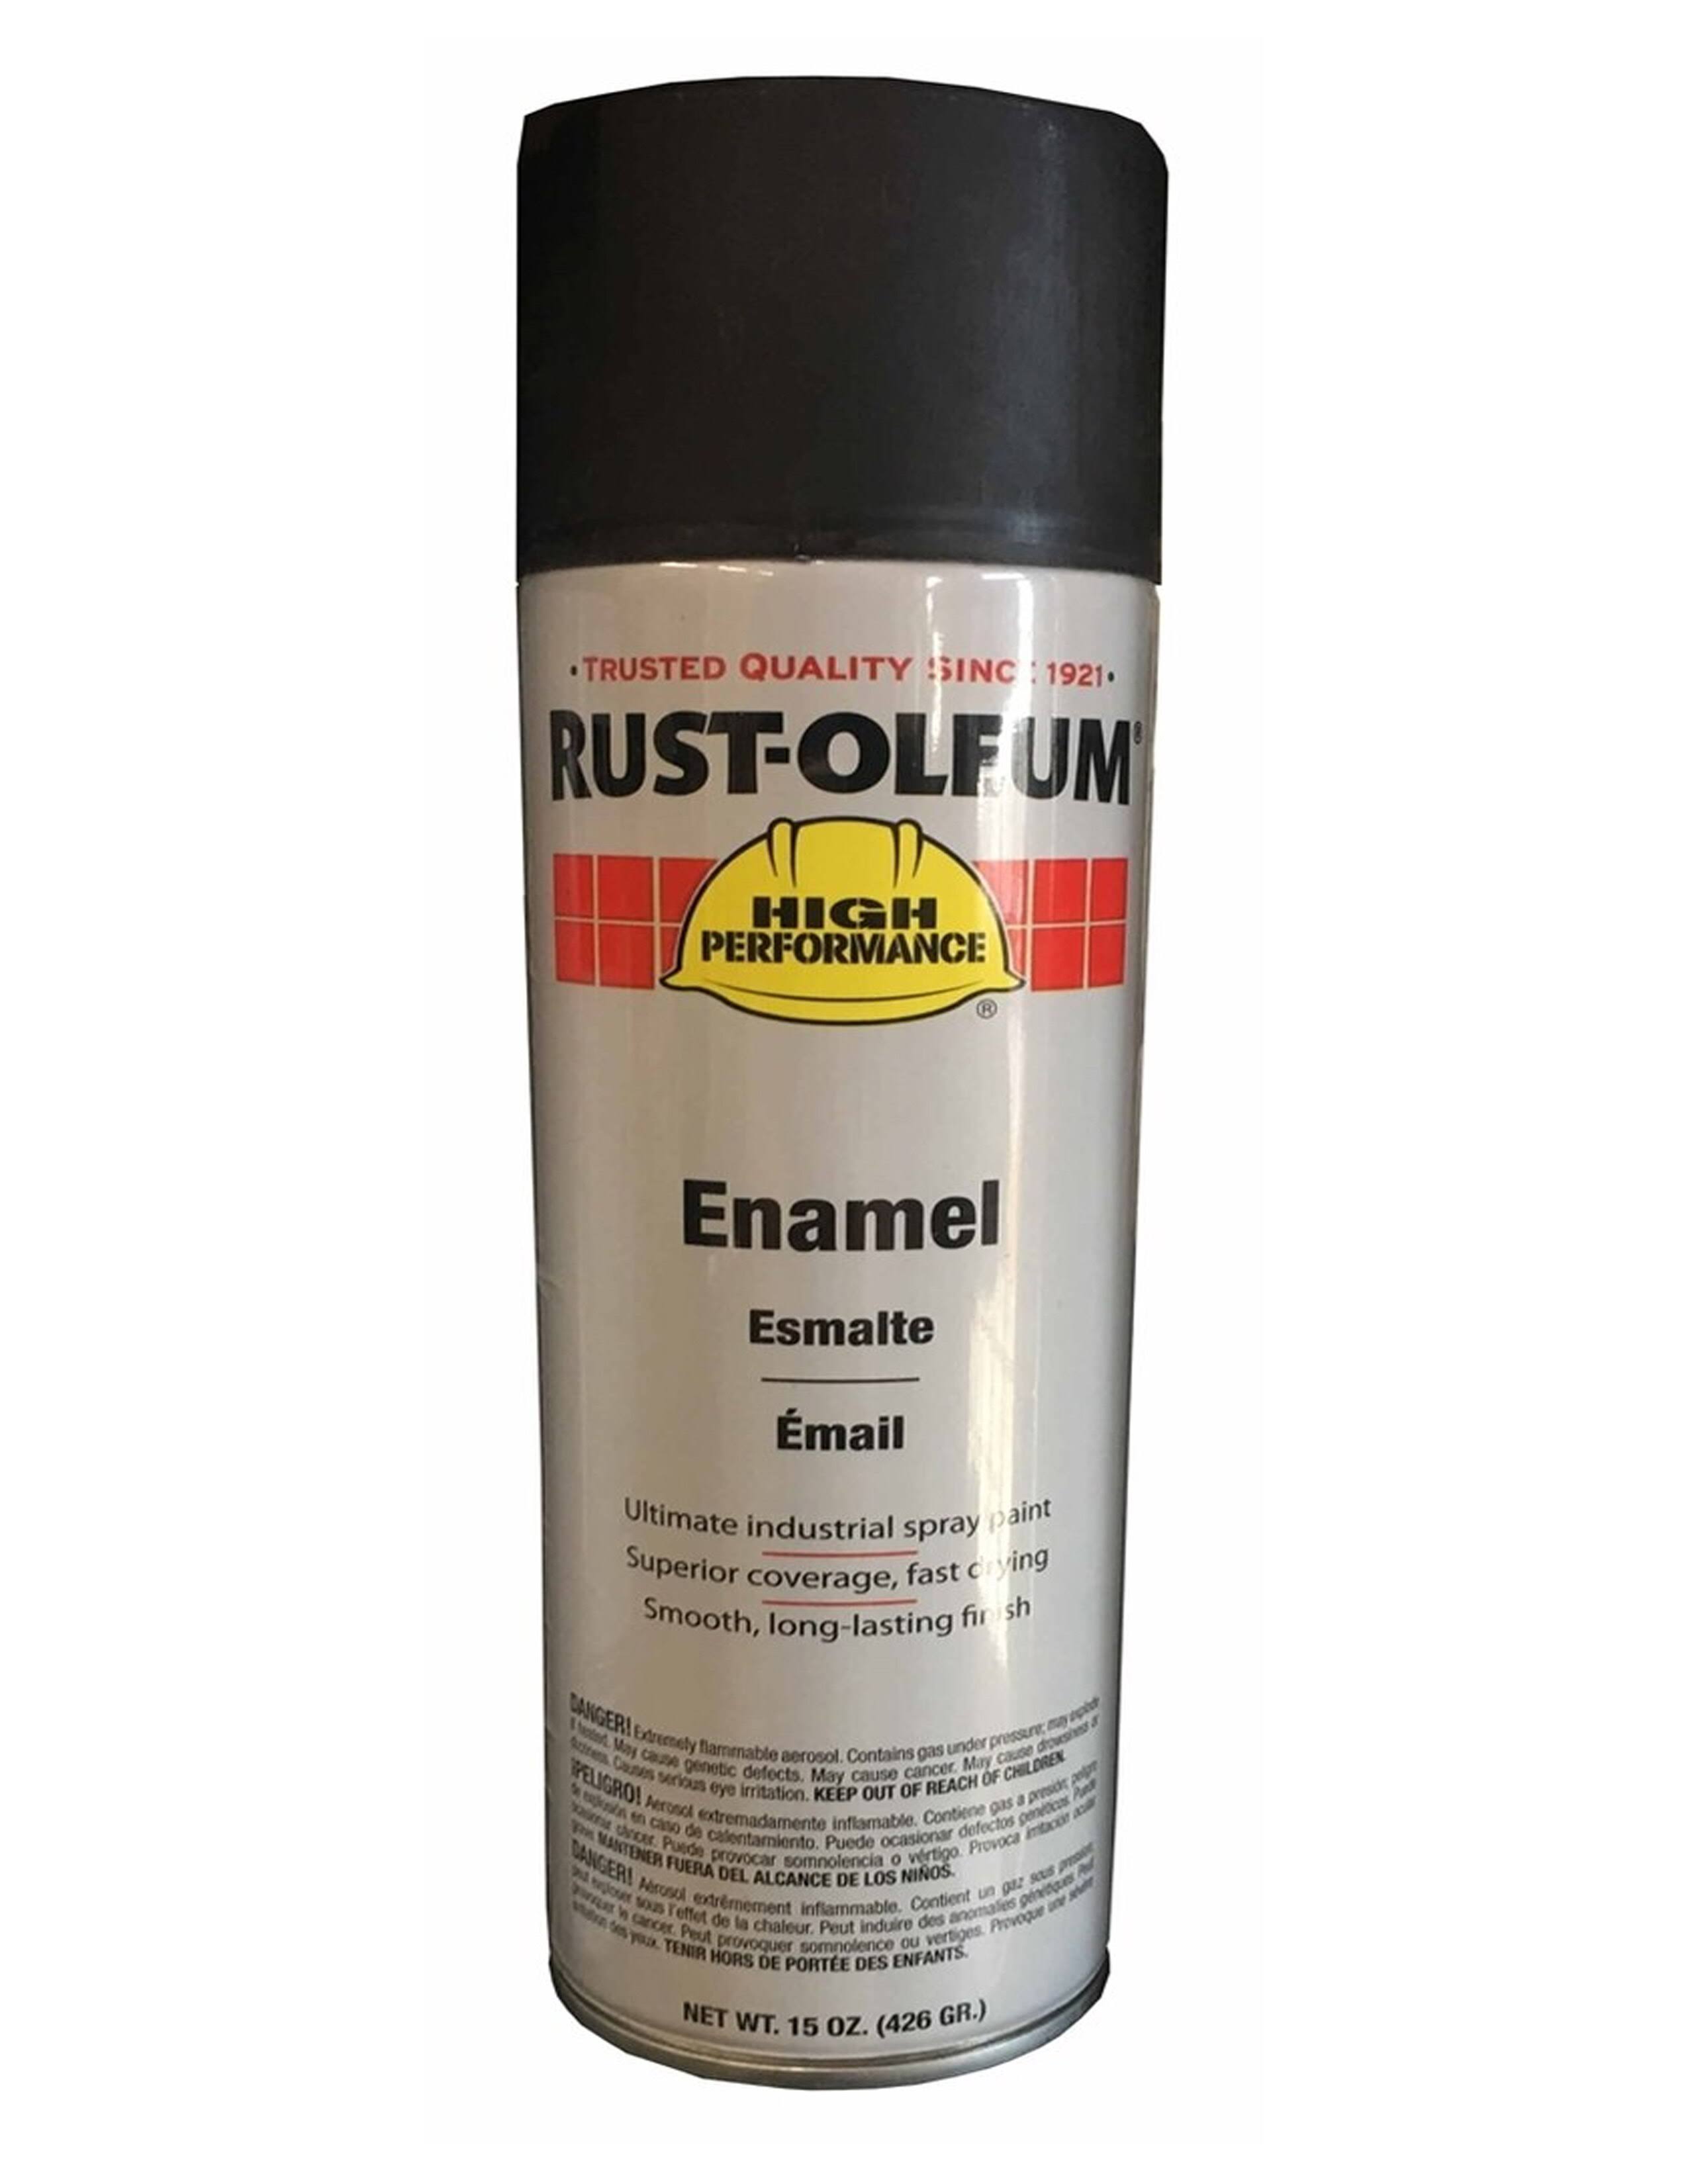 Rust-oleum High Performance Enamel Spray Paint - Black, 15oz